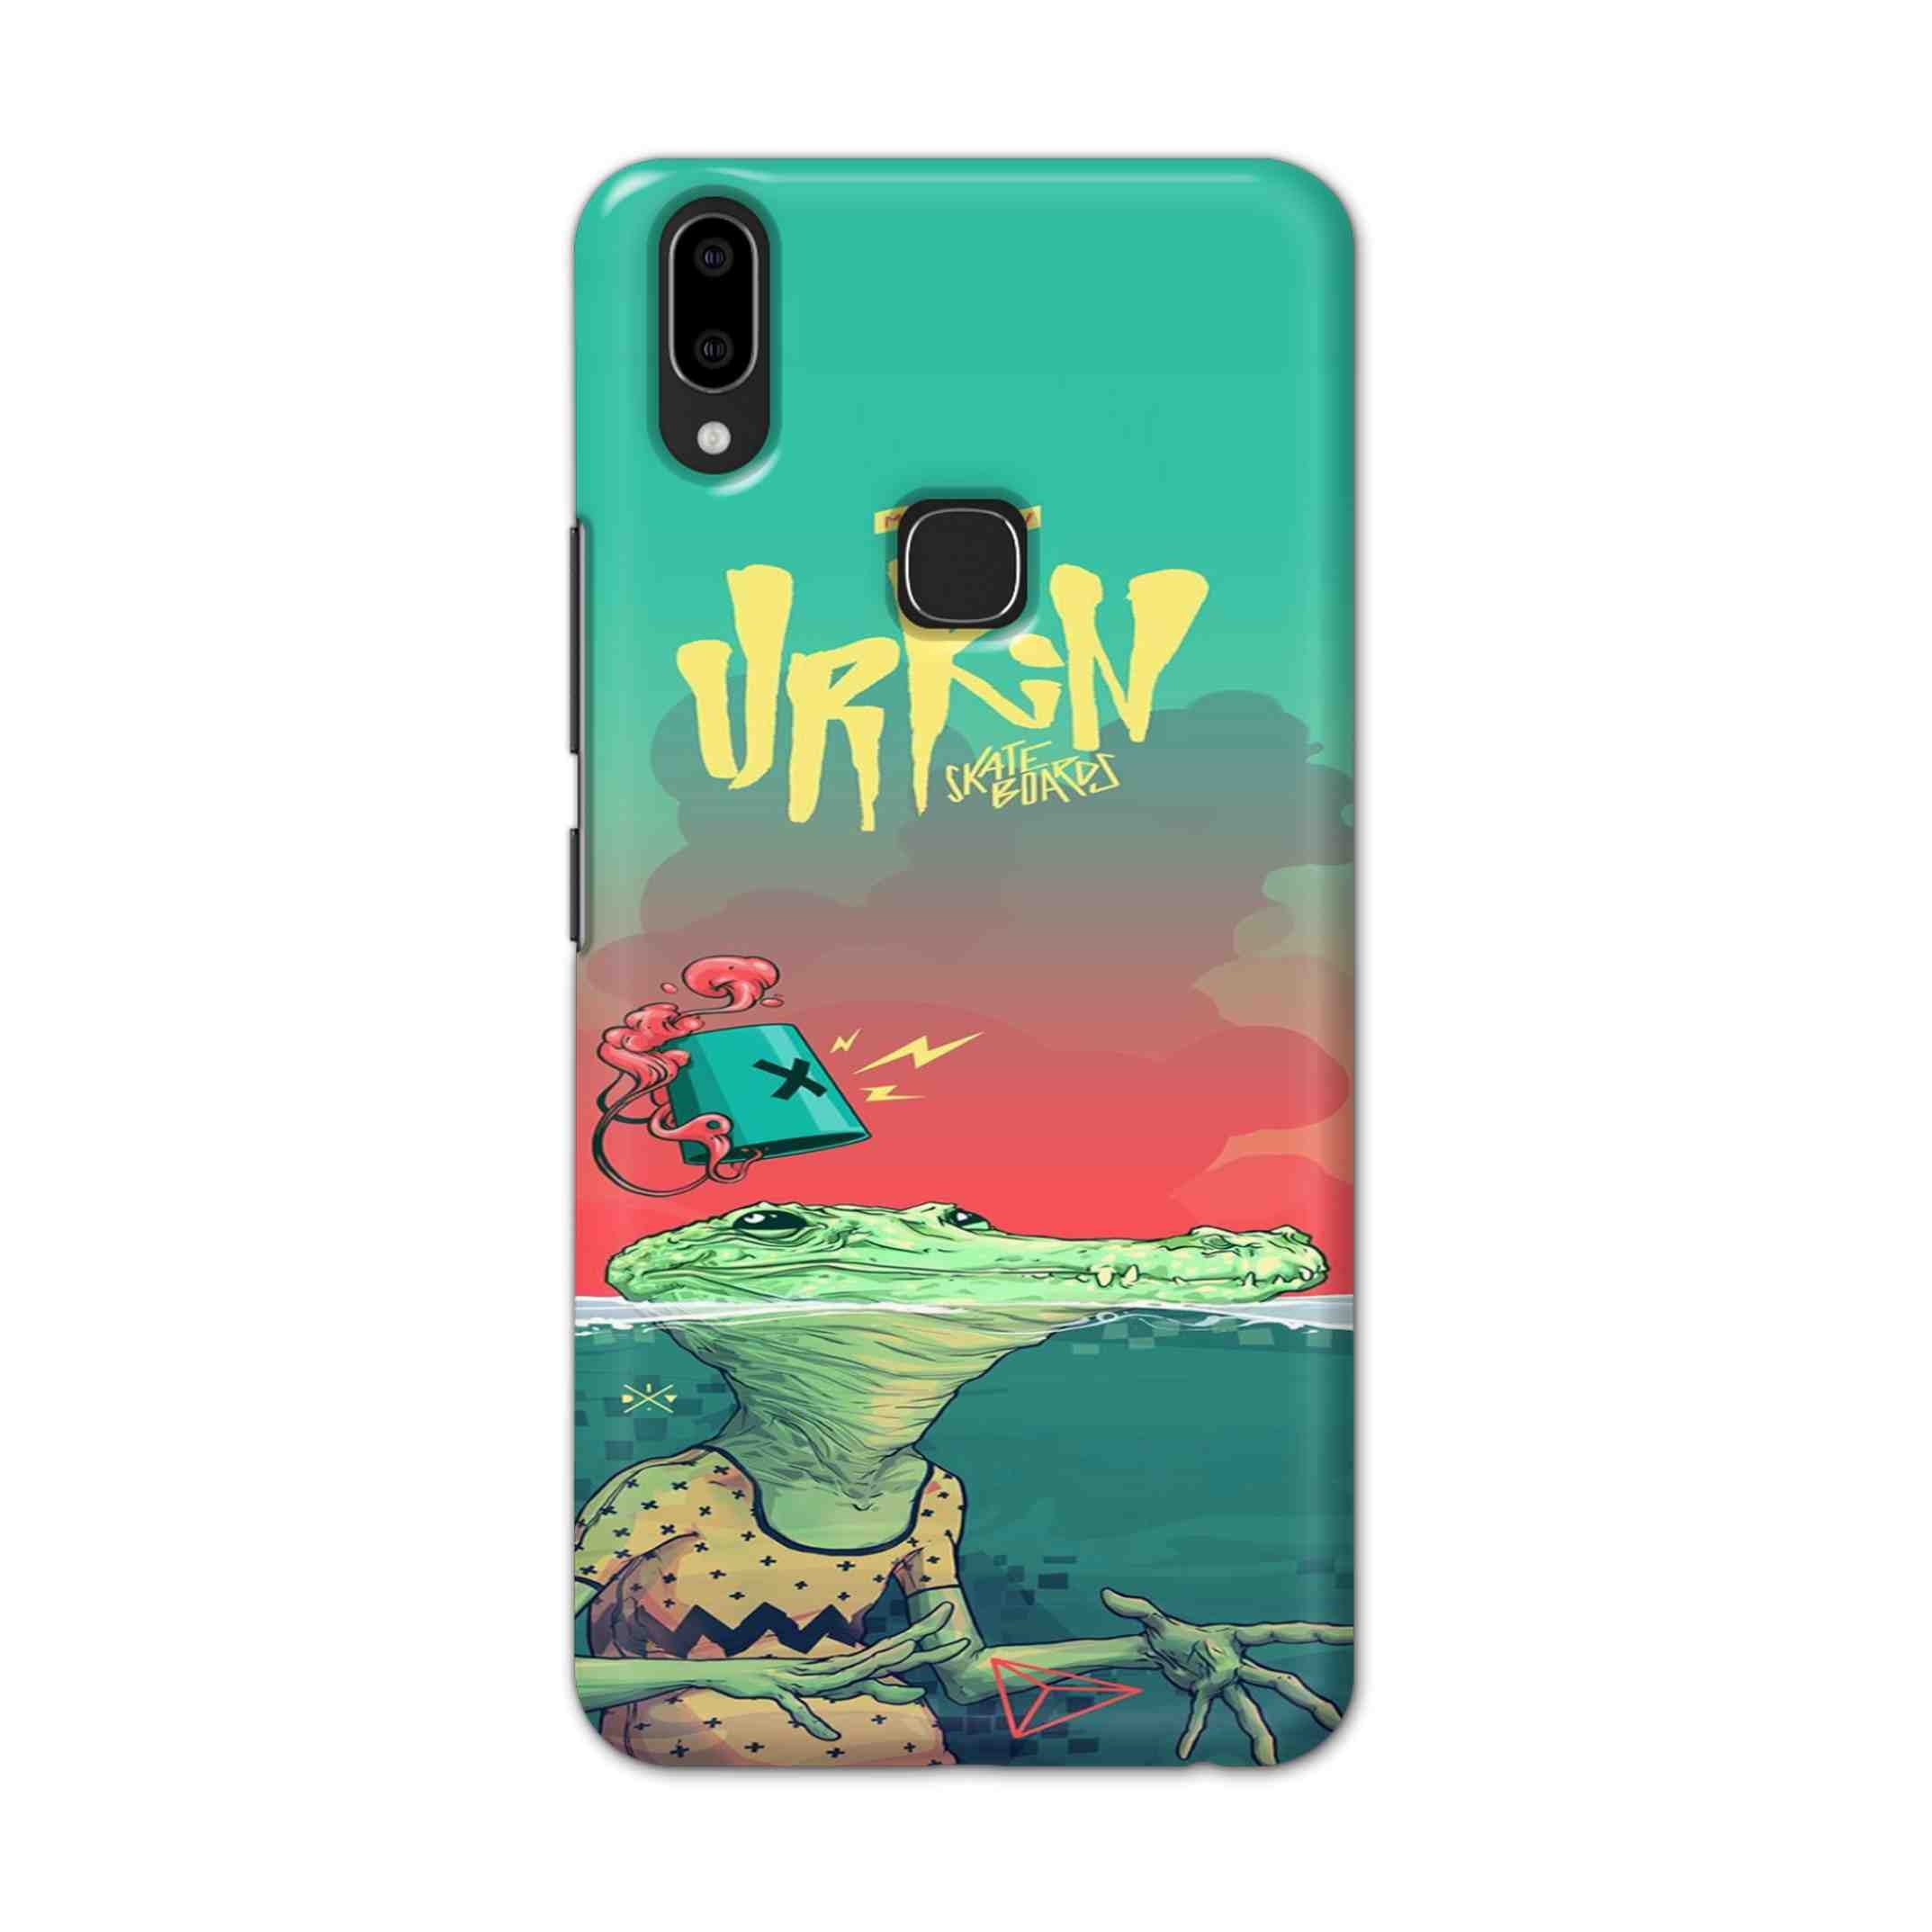 Buy Urkin Hard Back Mobile Phone Case Cover For Vivo V9 / V9 Youth Online